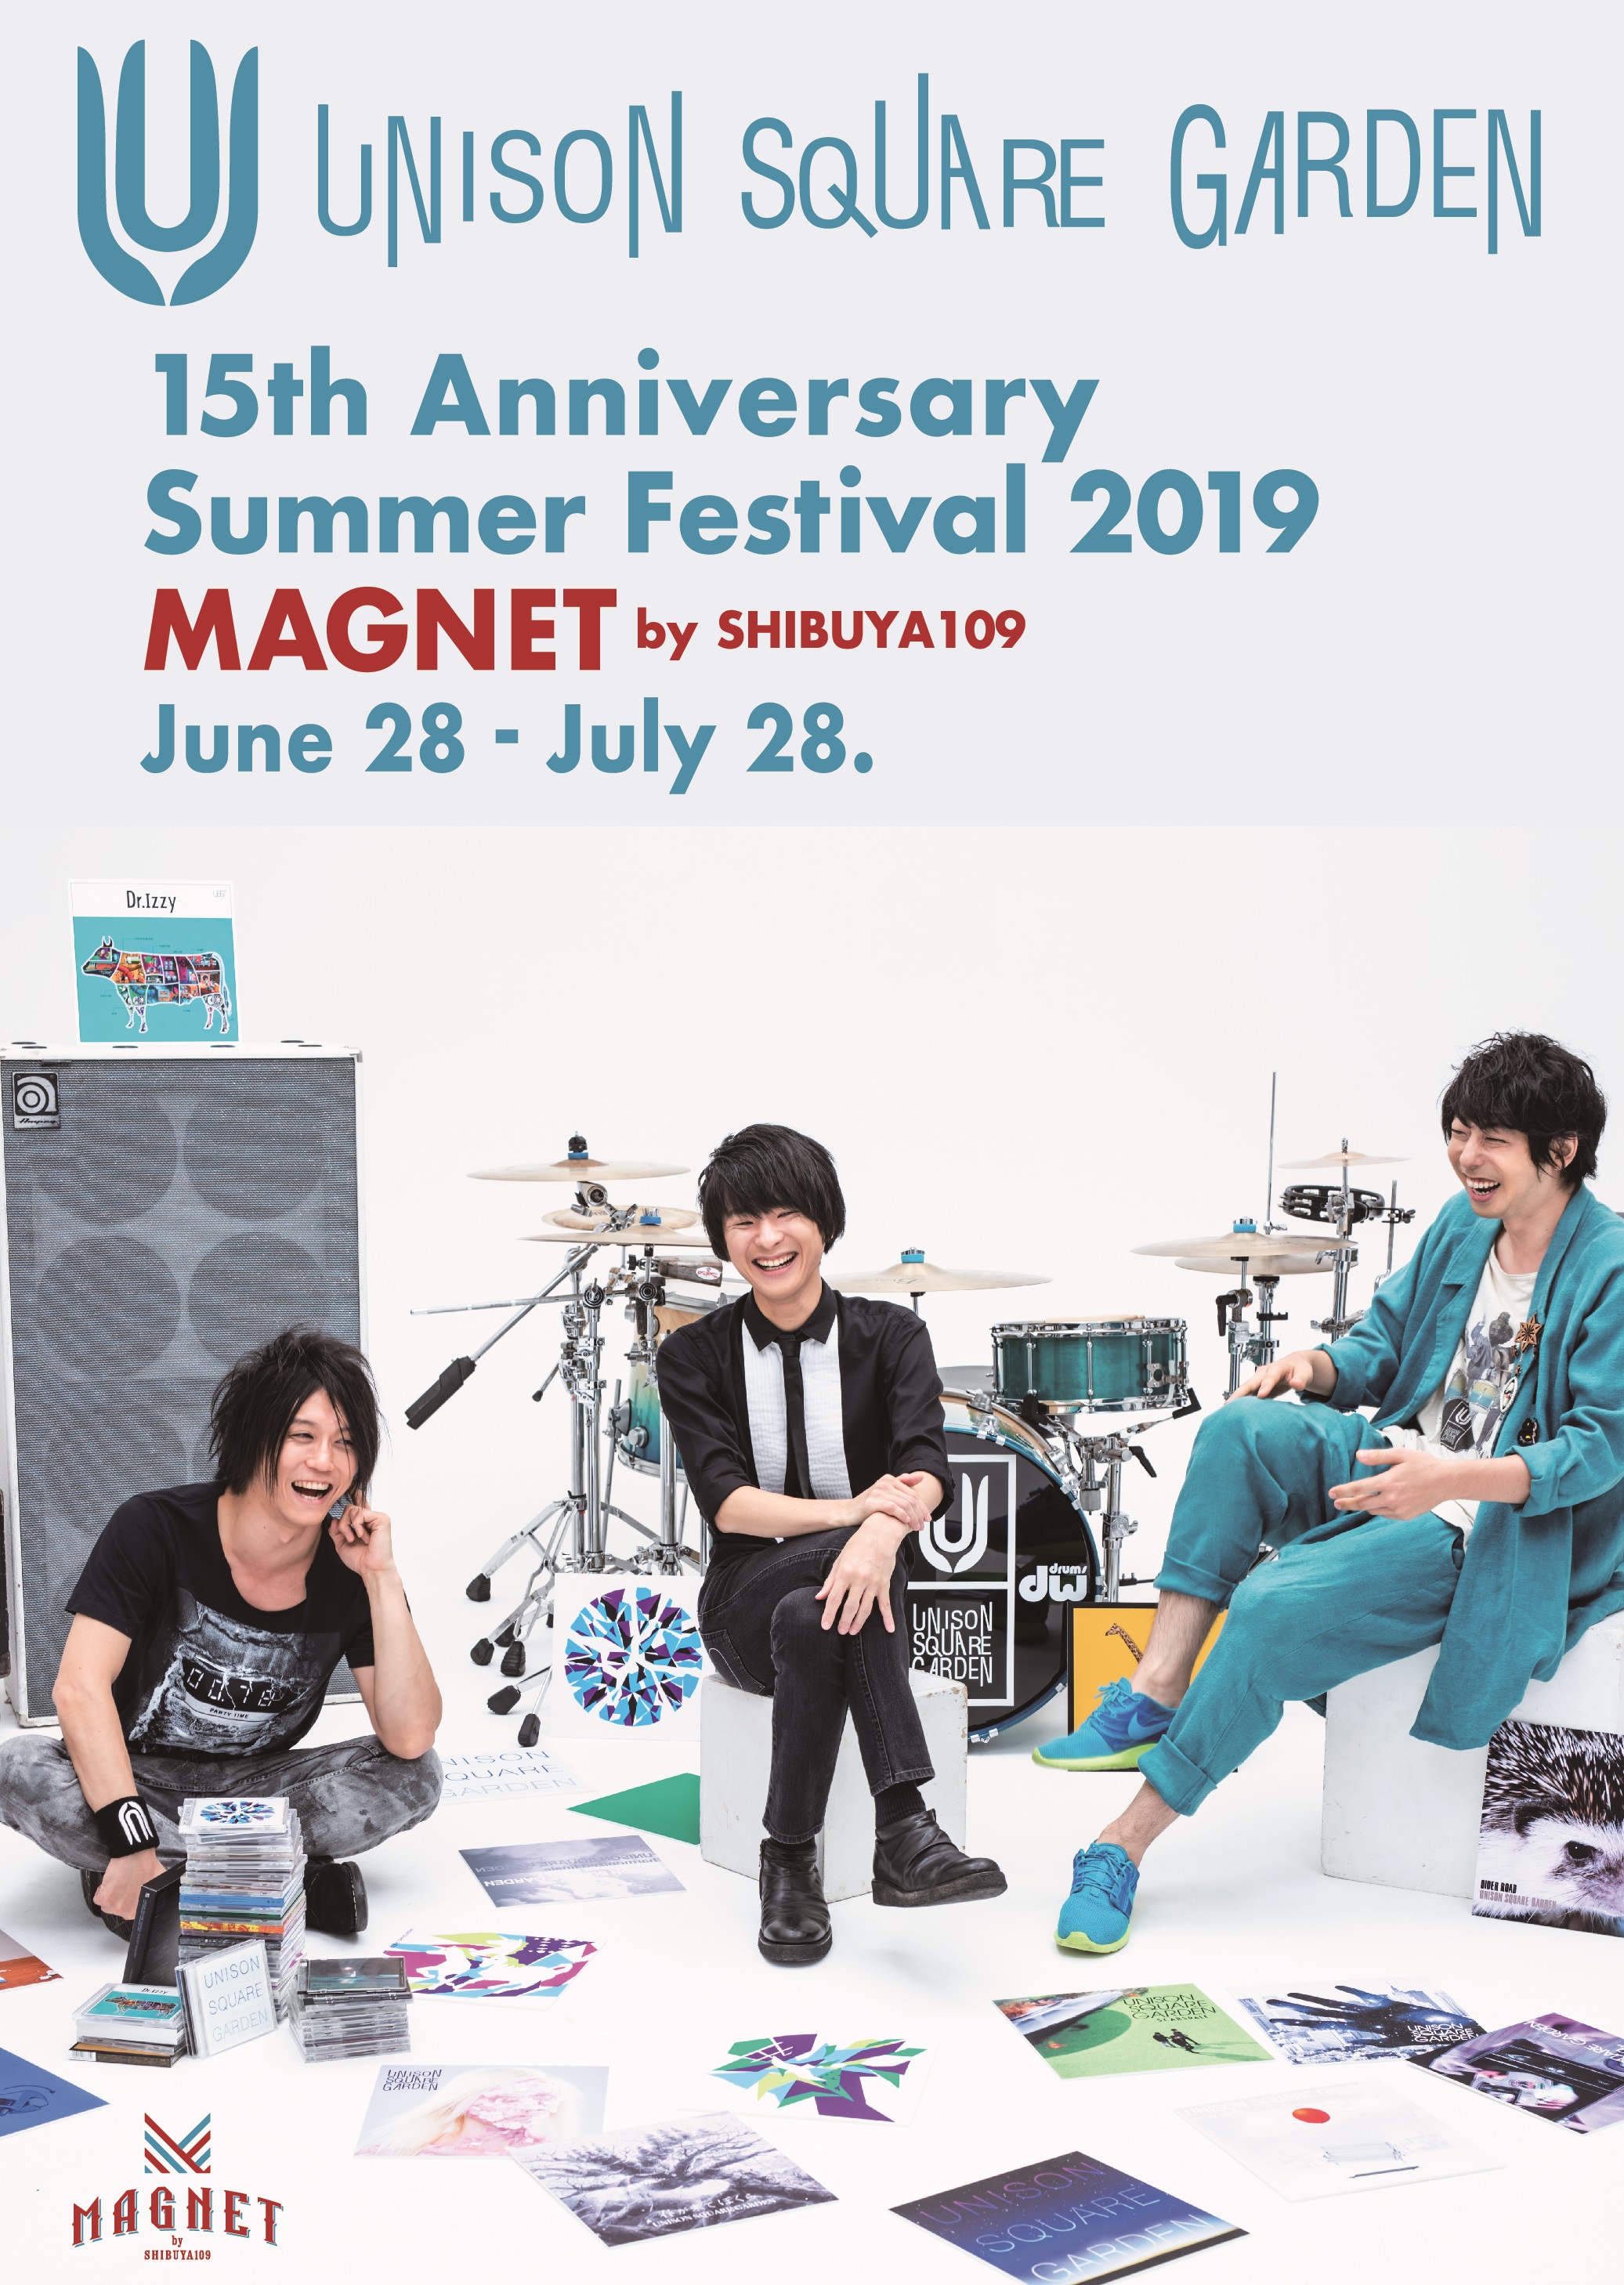 Unison Square Garden 15th Anniversary Summer Festival 19 Magnet By Shibuya109 スペシャルキャンペーンの詳細が決定 株式会社shibuya109エンタテイメント